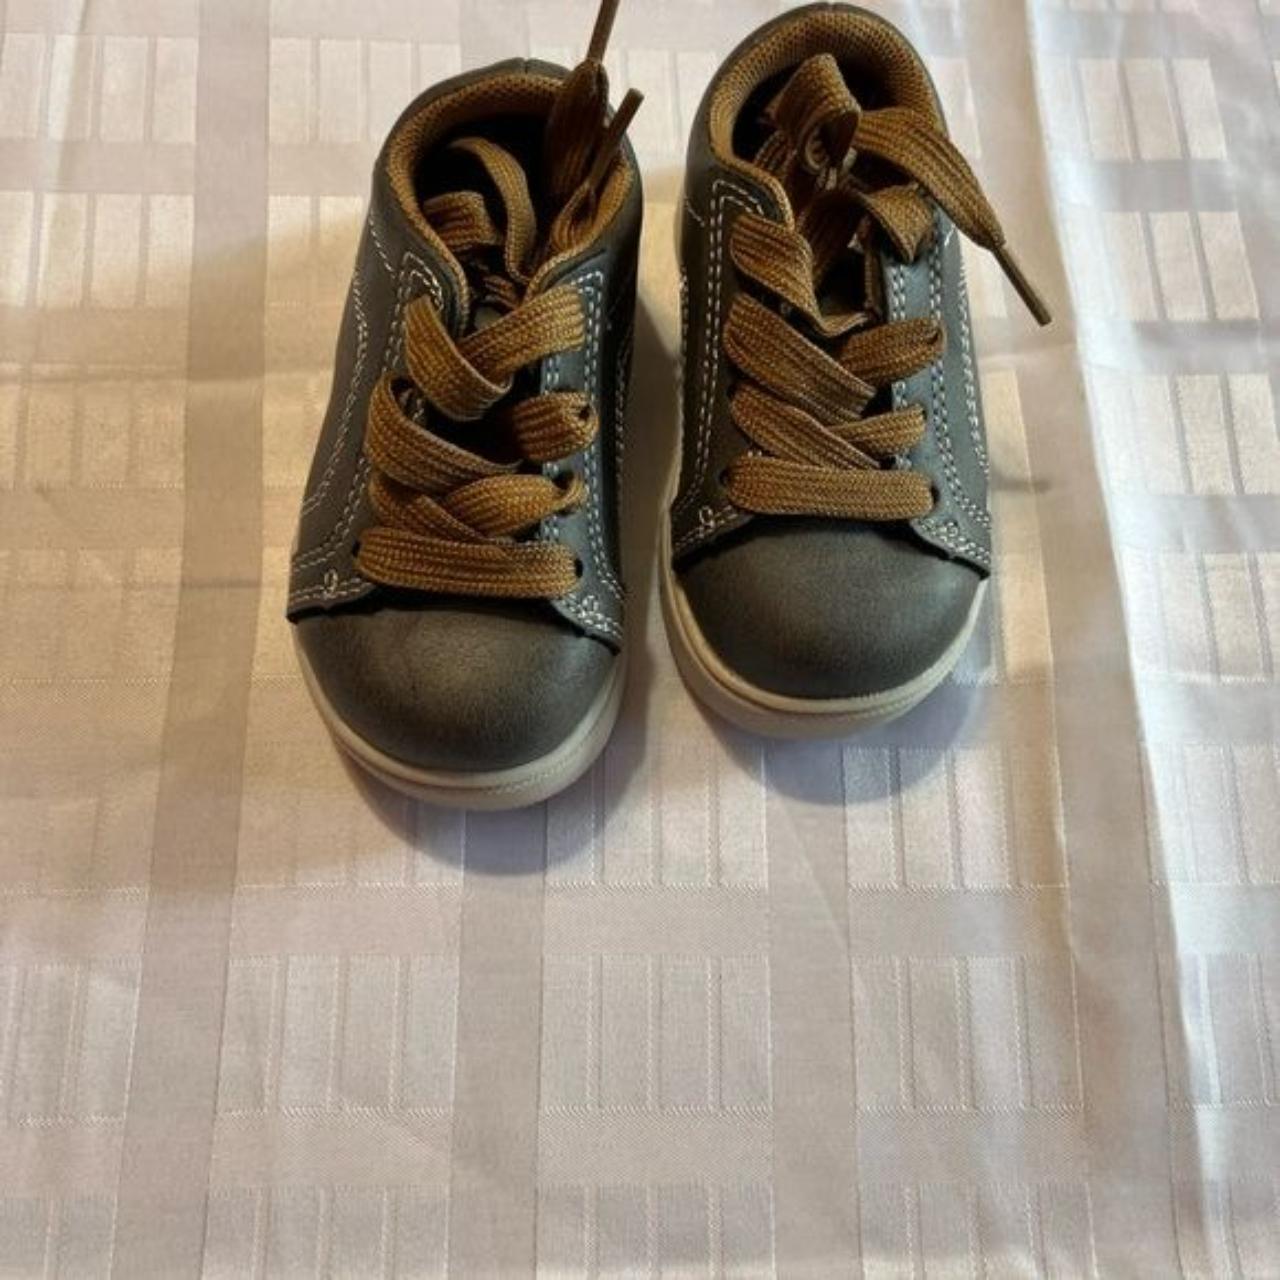 zoe & zacToddler shoes size 5 toddler color gray - Depop